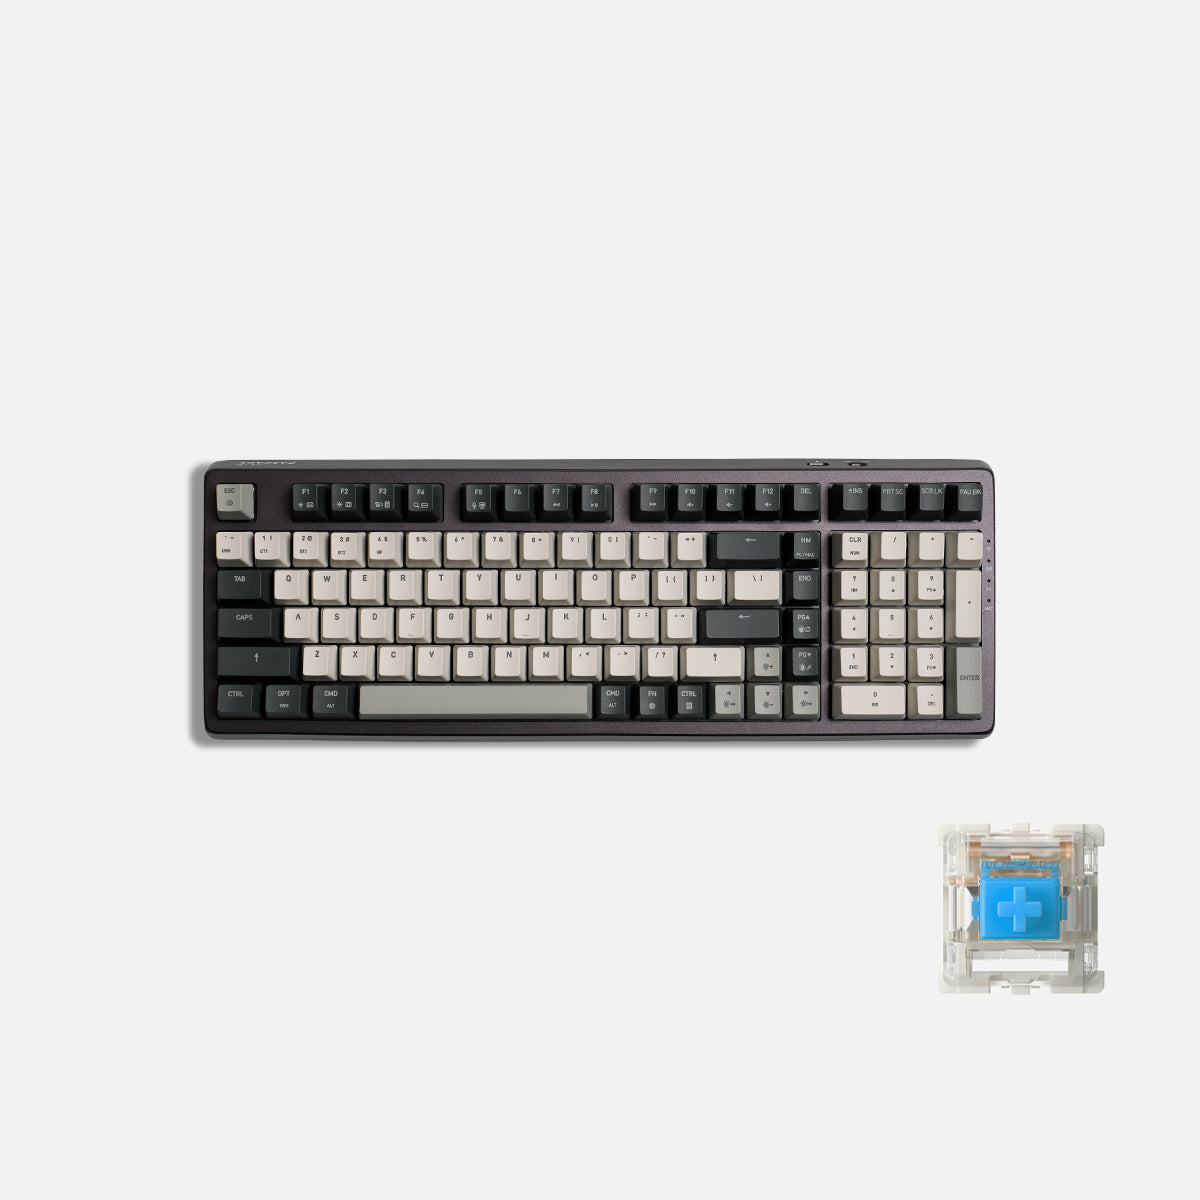 Cascade 98% Wireless Hot-Swappable Keyboard